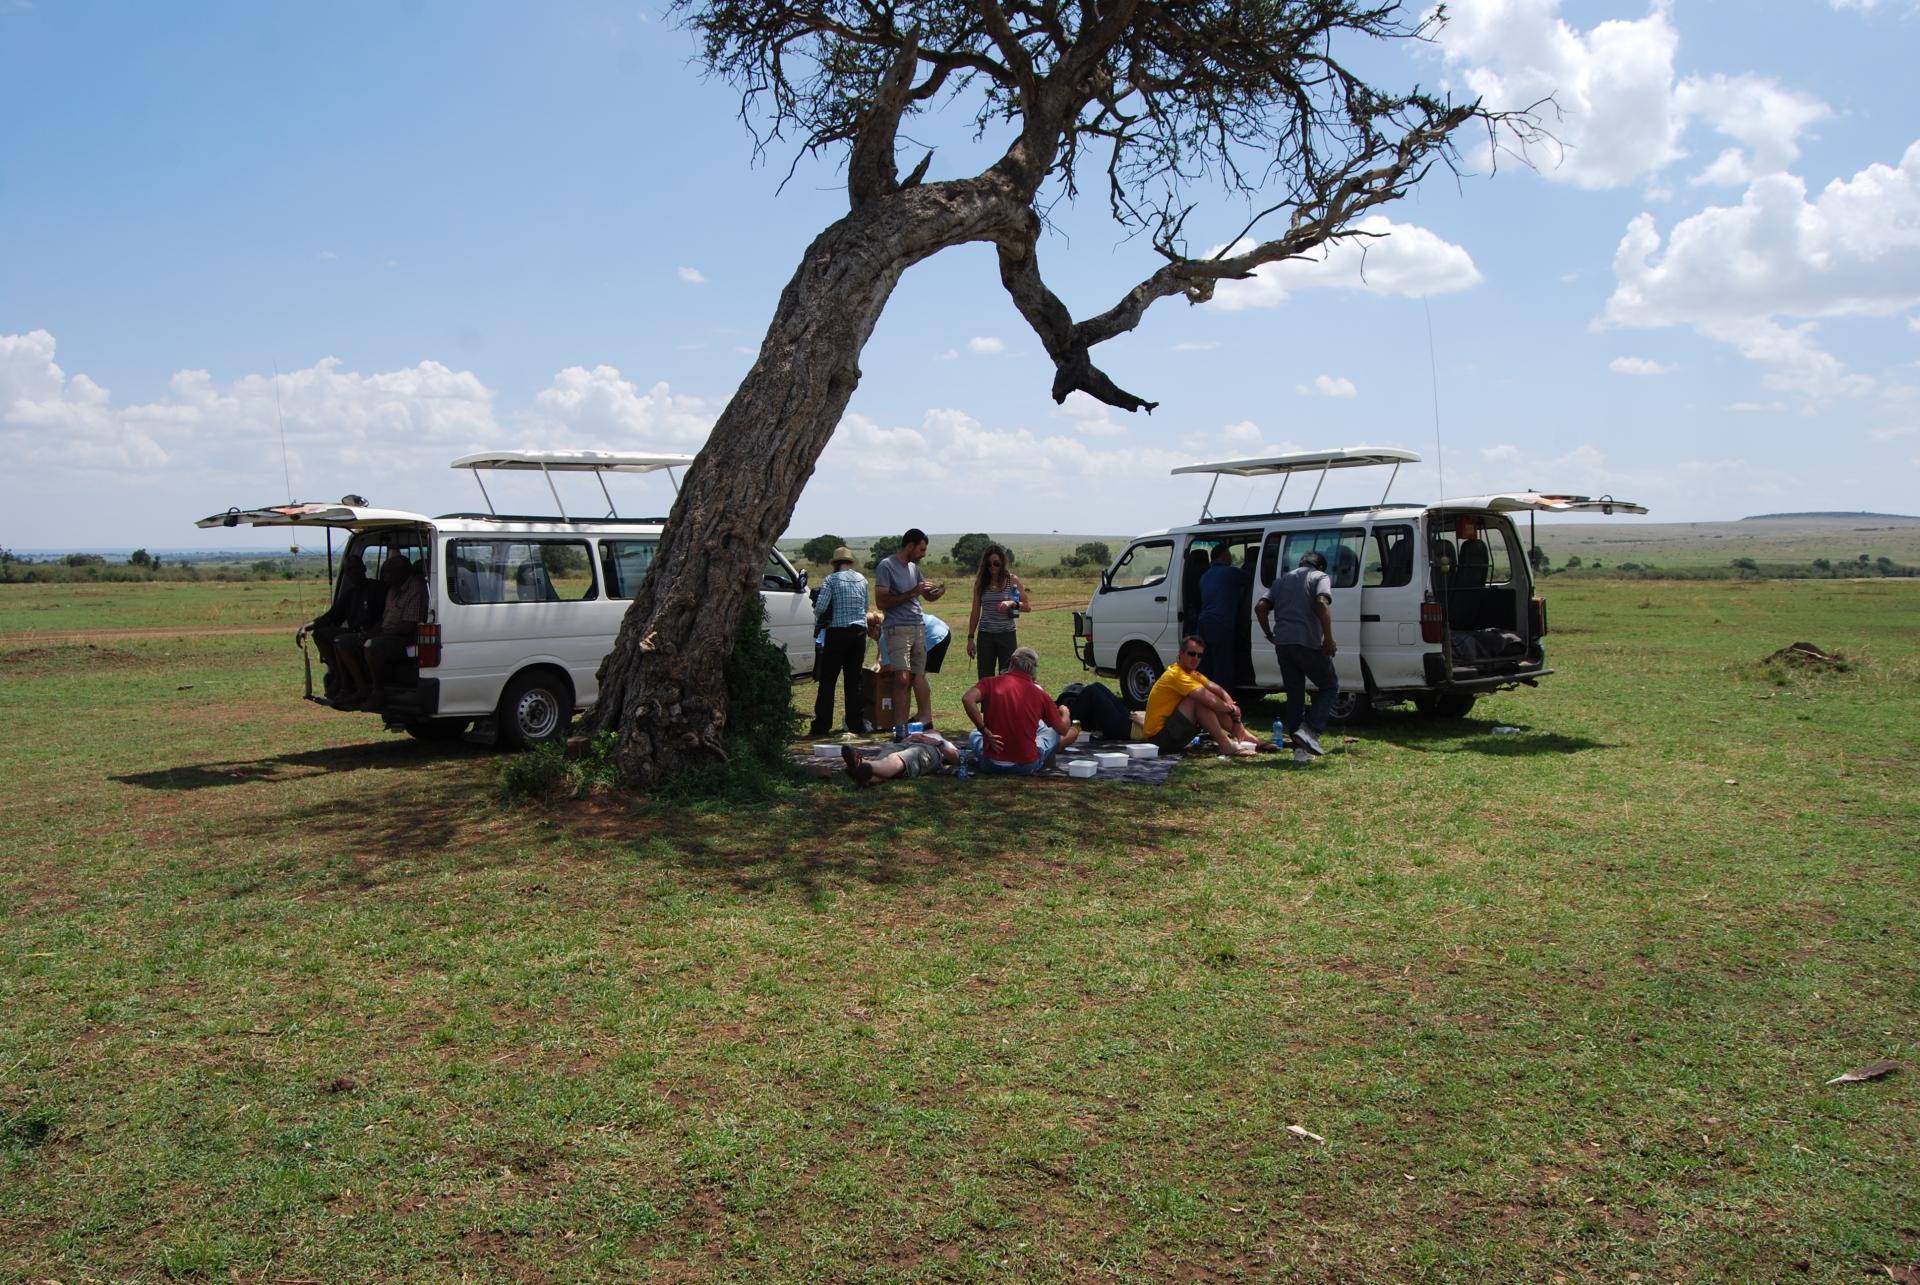 Small Group Adventures, Kenya Adventure Safaris, Guided Small Group Tours, YHA Kenya Travel, Wildlife Safaris, Safari Bookings.